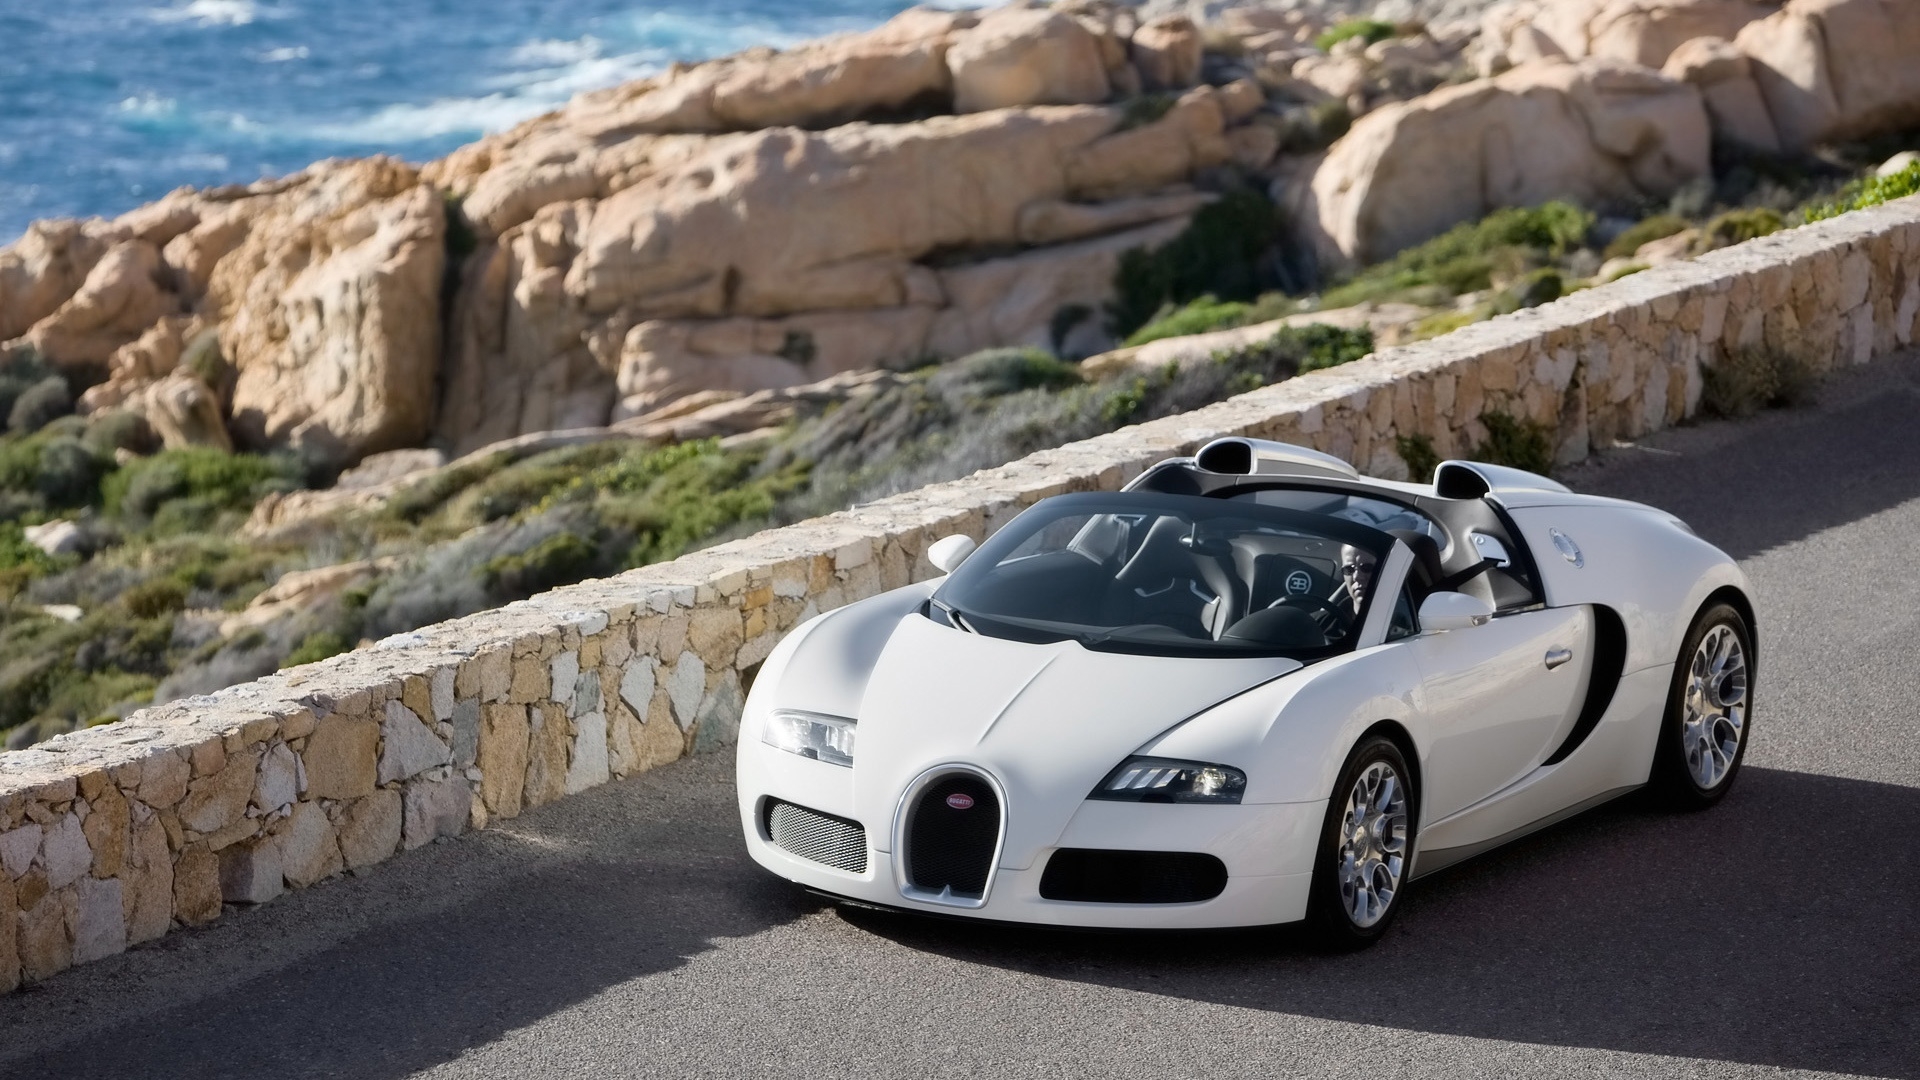 Bugatti Veyron 16.4 Grand Sport Production Version 2009 for 1920 x 1080 HDTV 1080p resolution